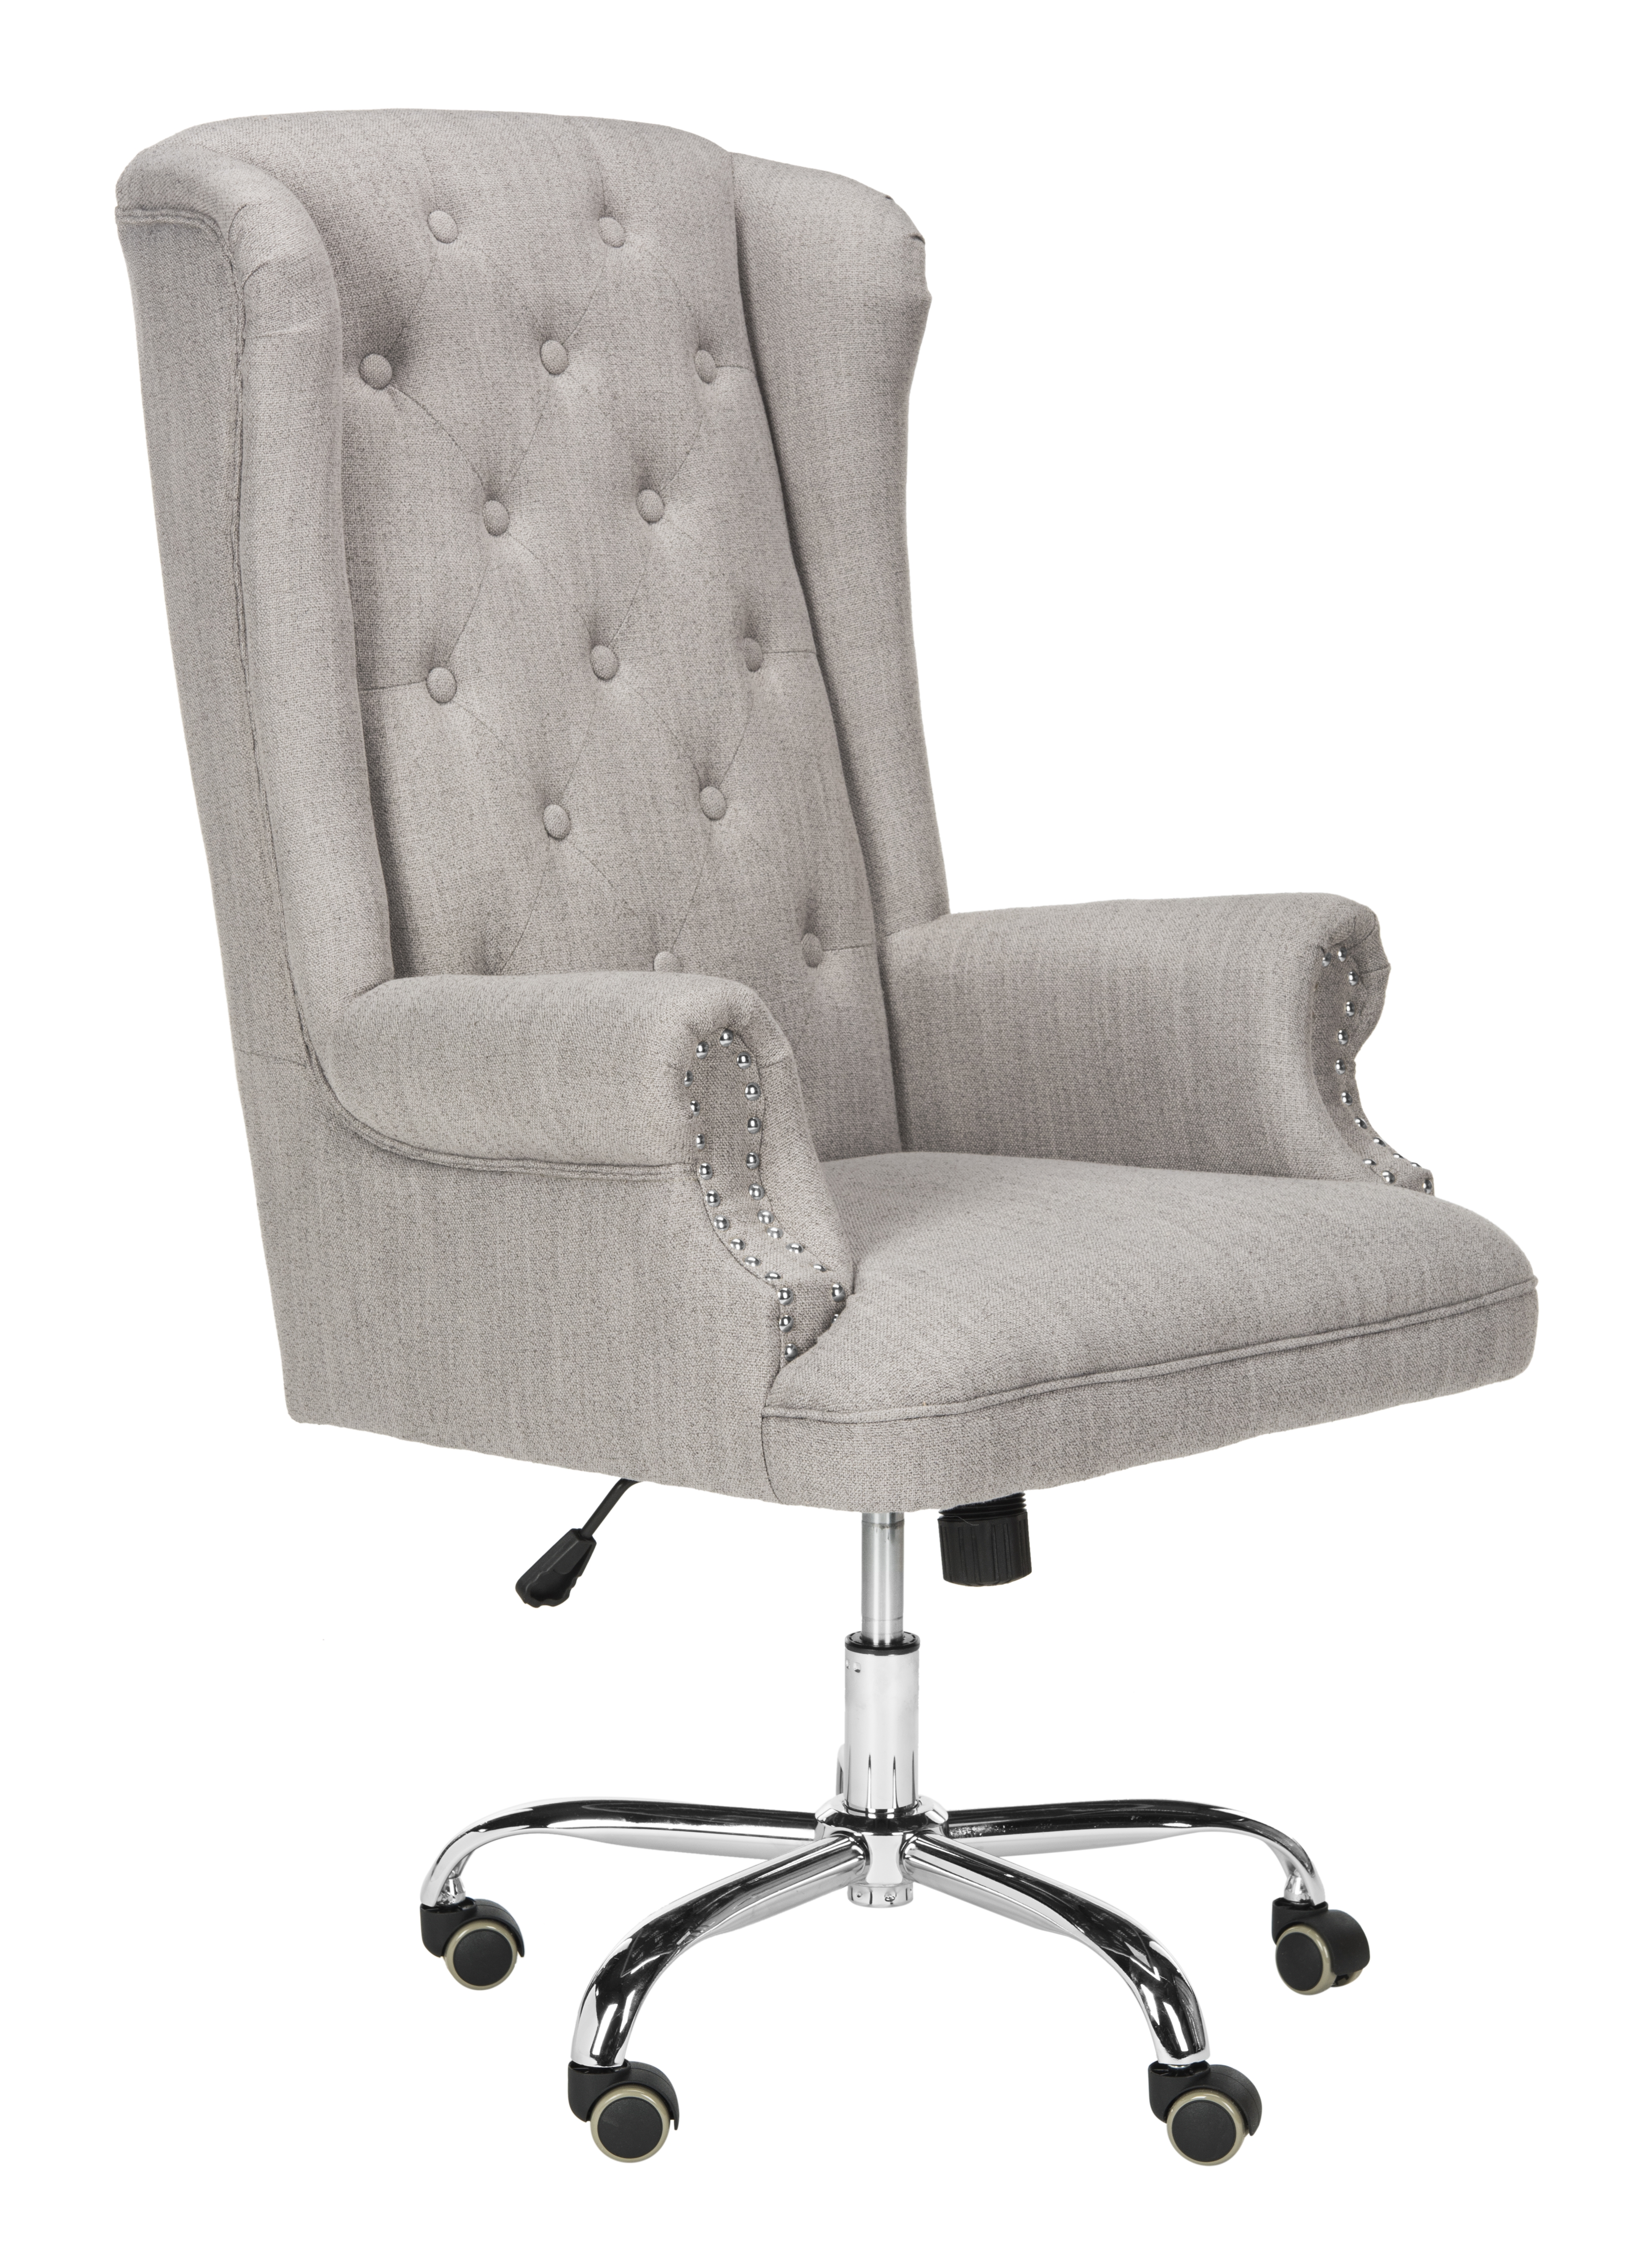 Ian Linen Chrome Leg Swivel Office Chair - Grey/Chrome - Arlo Home - Image 1